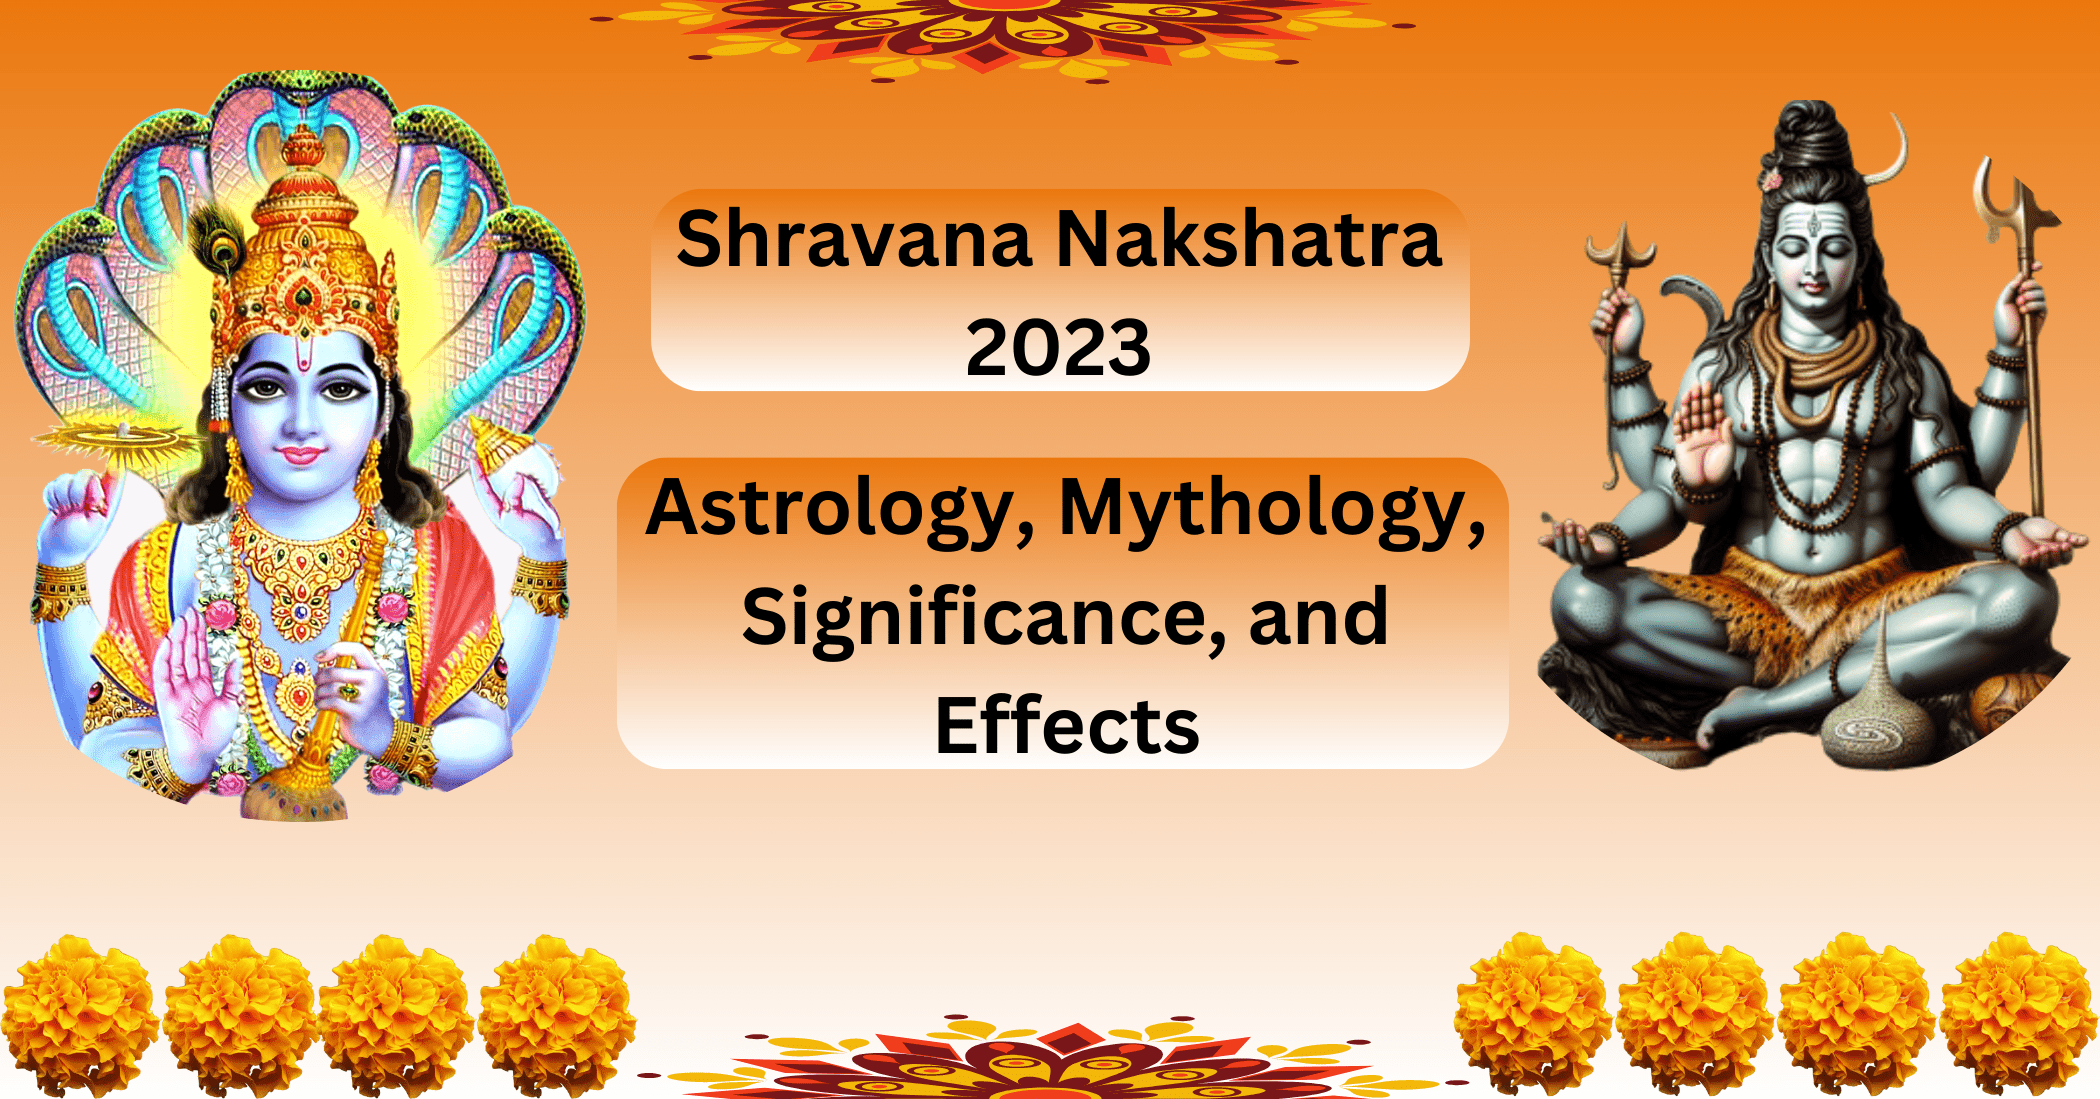 Shravana Nakshatra 2023 : Astrology, Mythology, Significance, and Effects